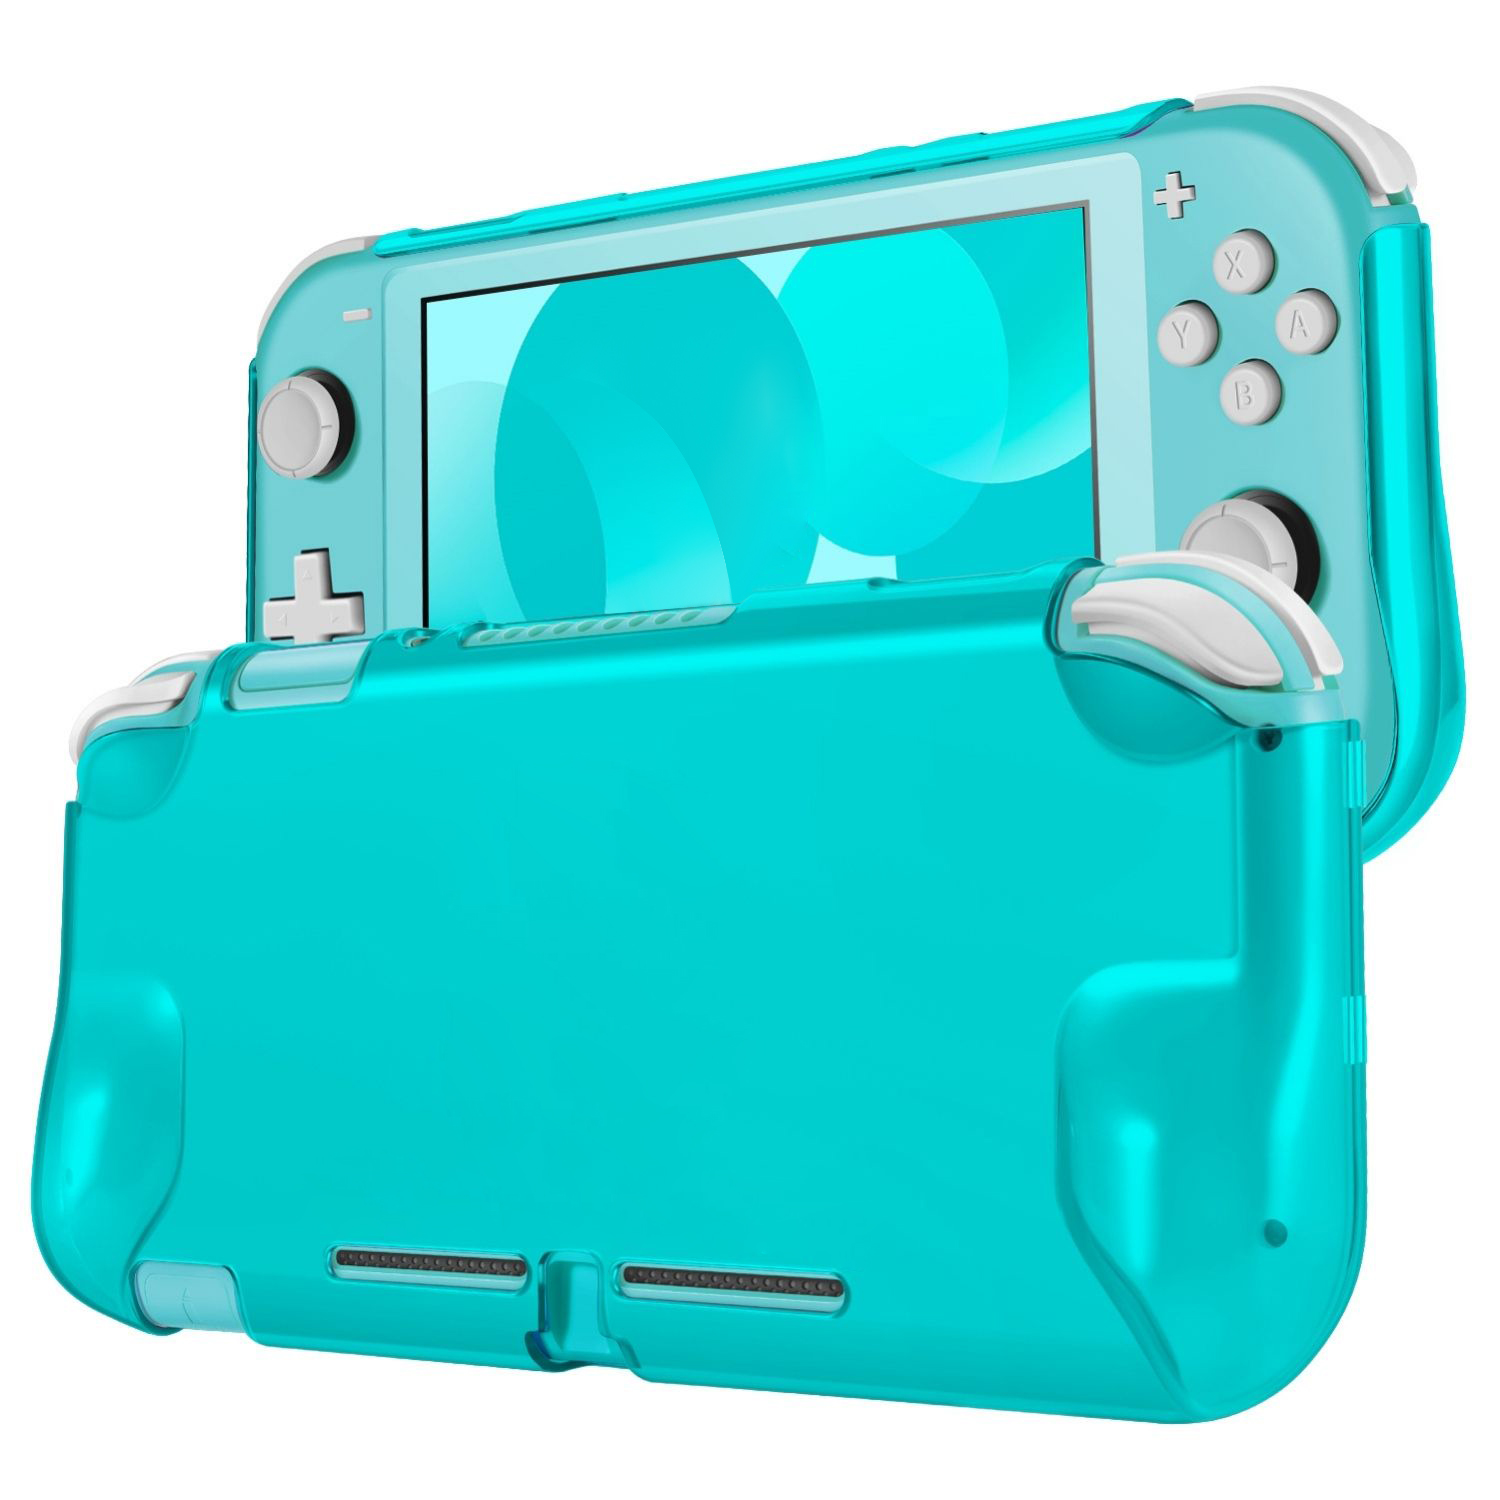 nintendo switch lite case with grip